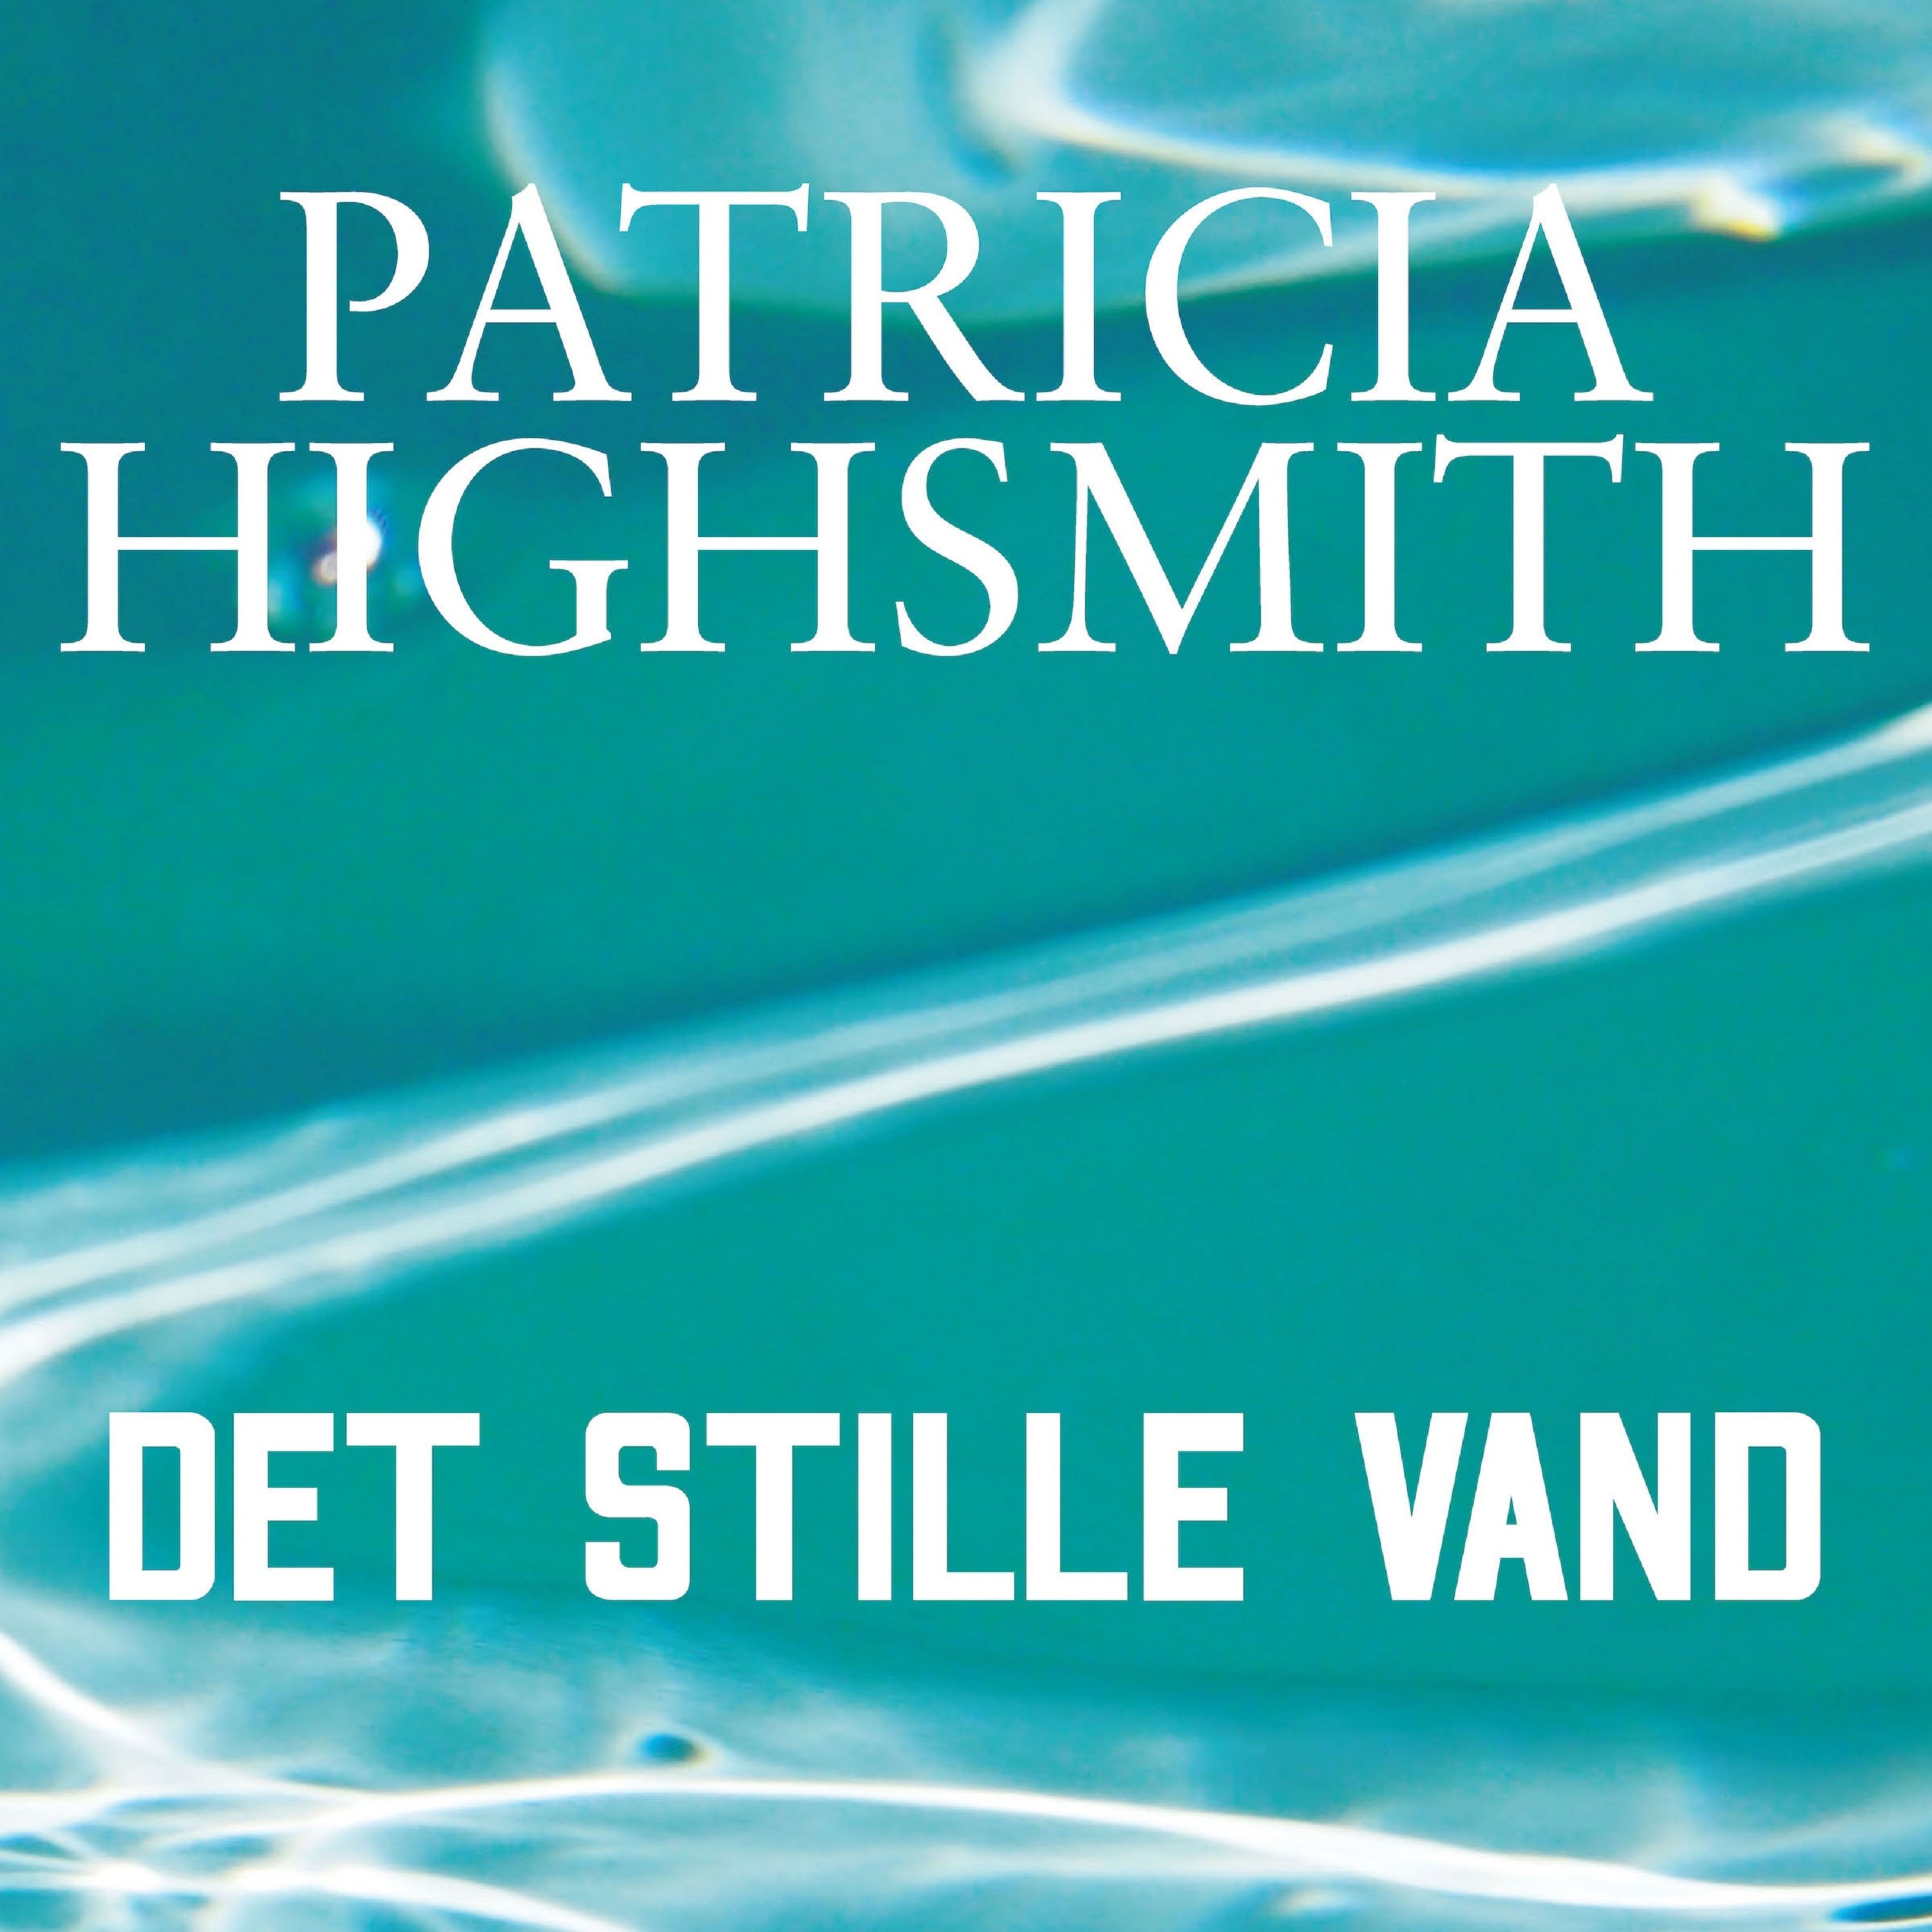 Det stille vand, audiobook by Patricia Highsmith